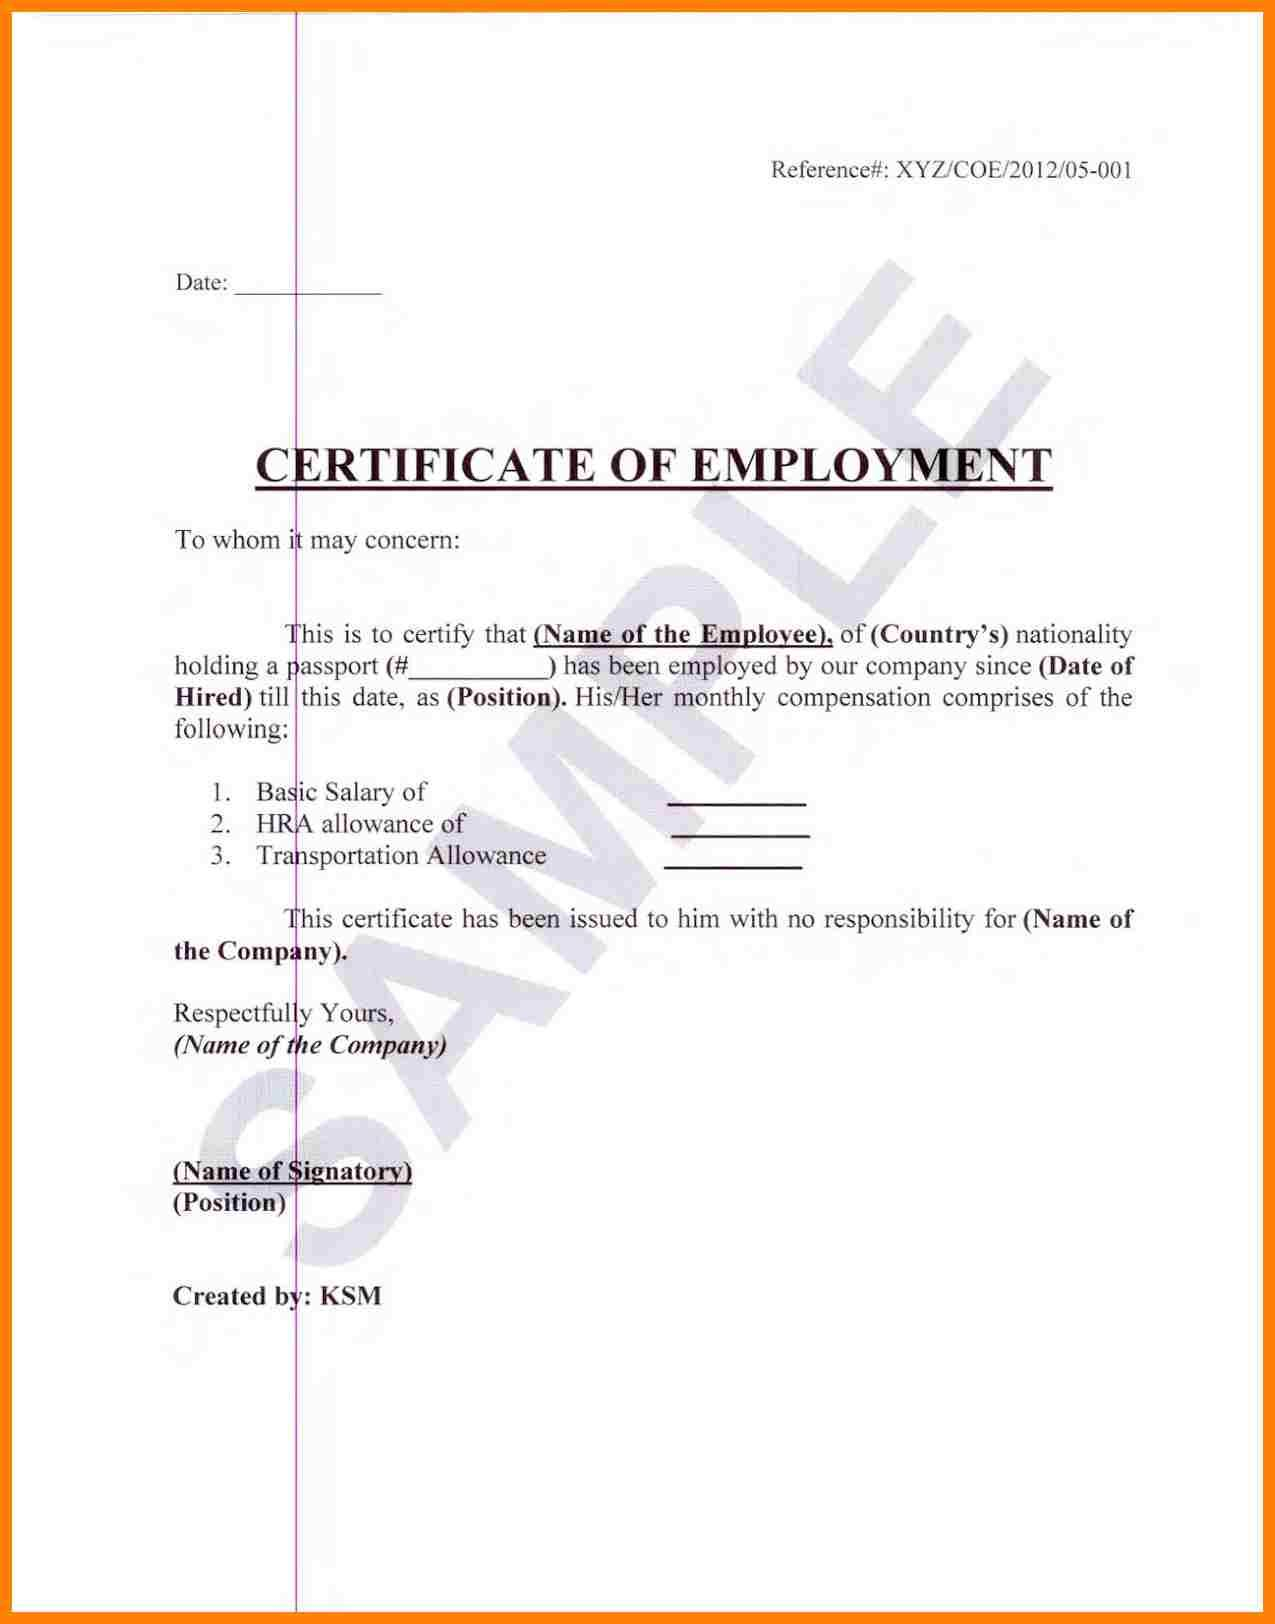 Sample Certification Employment Certificate Tugon Med Clinic With Certificate Of Employment Template